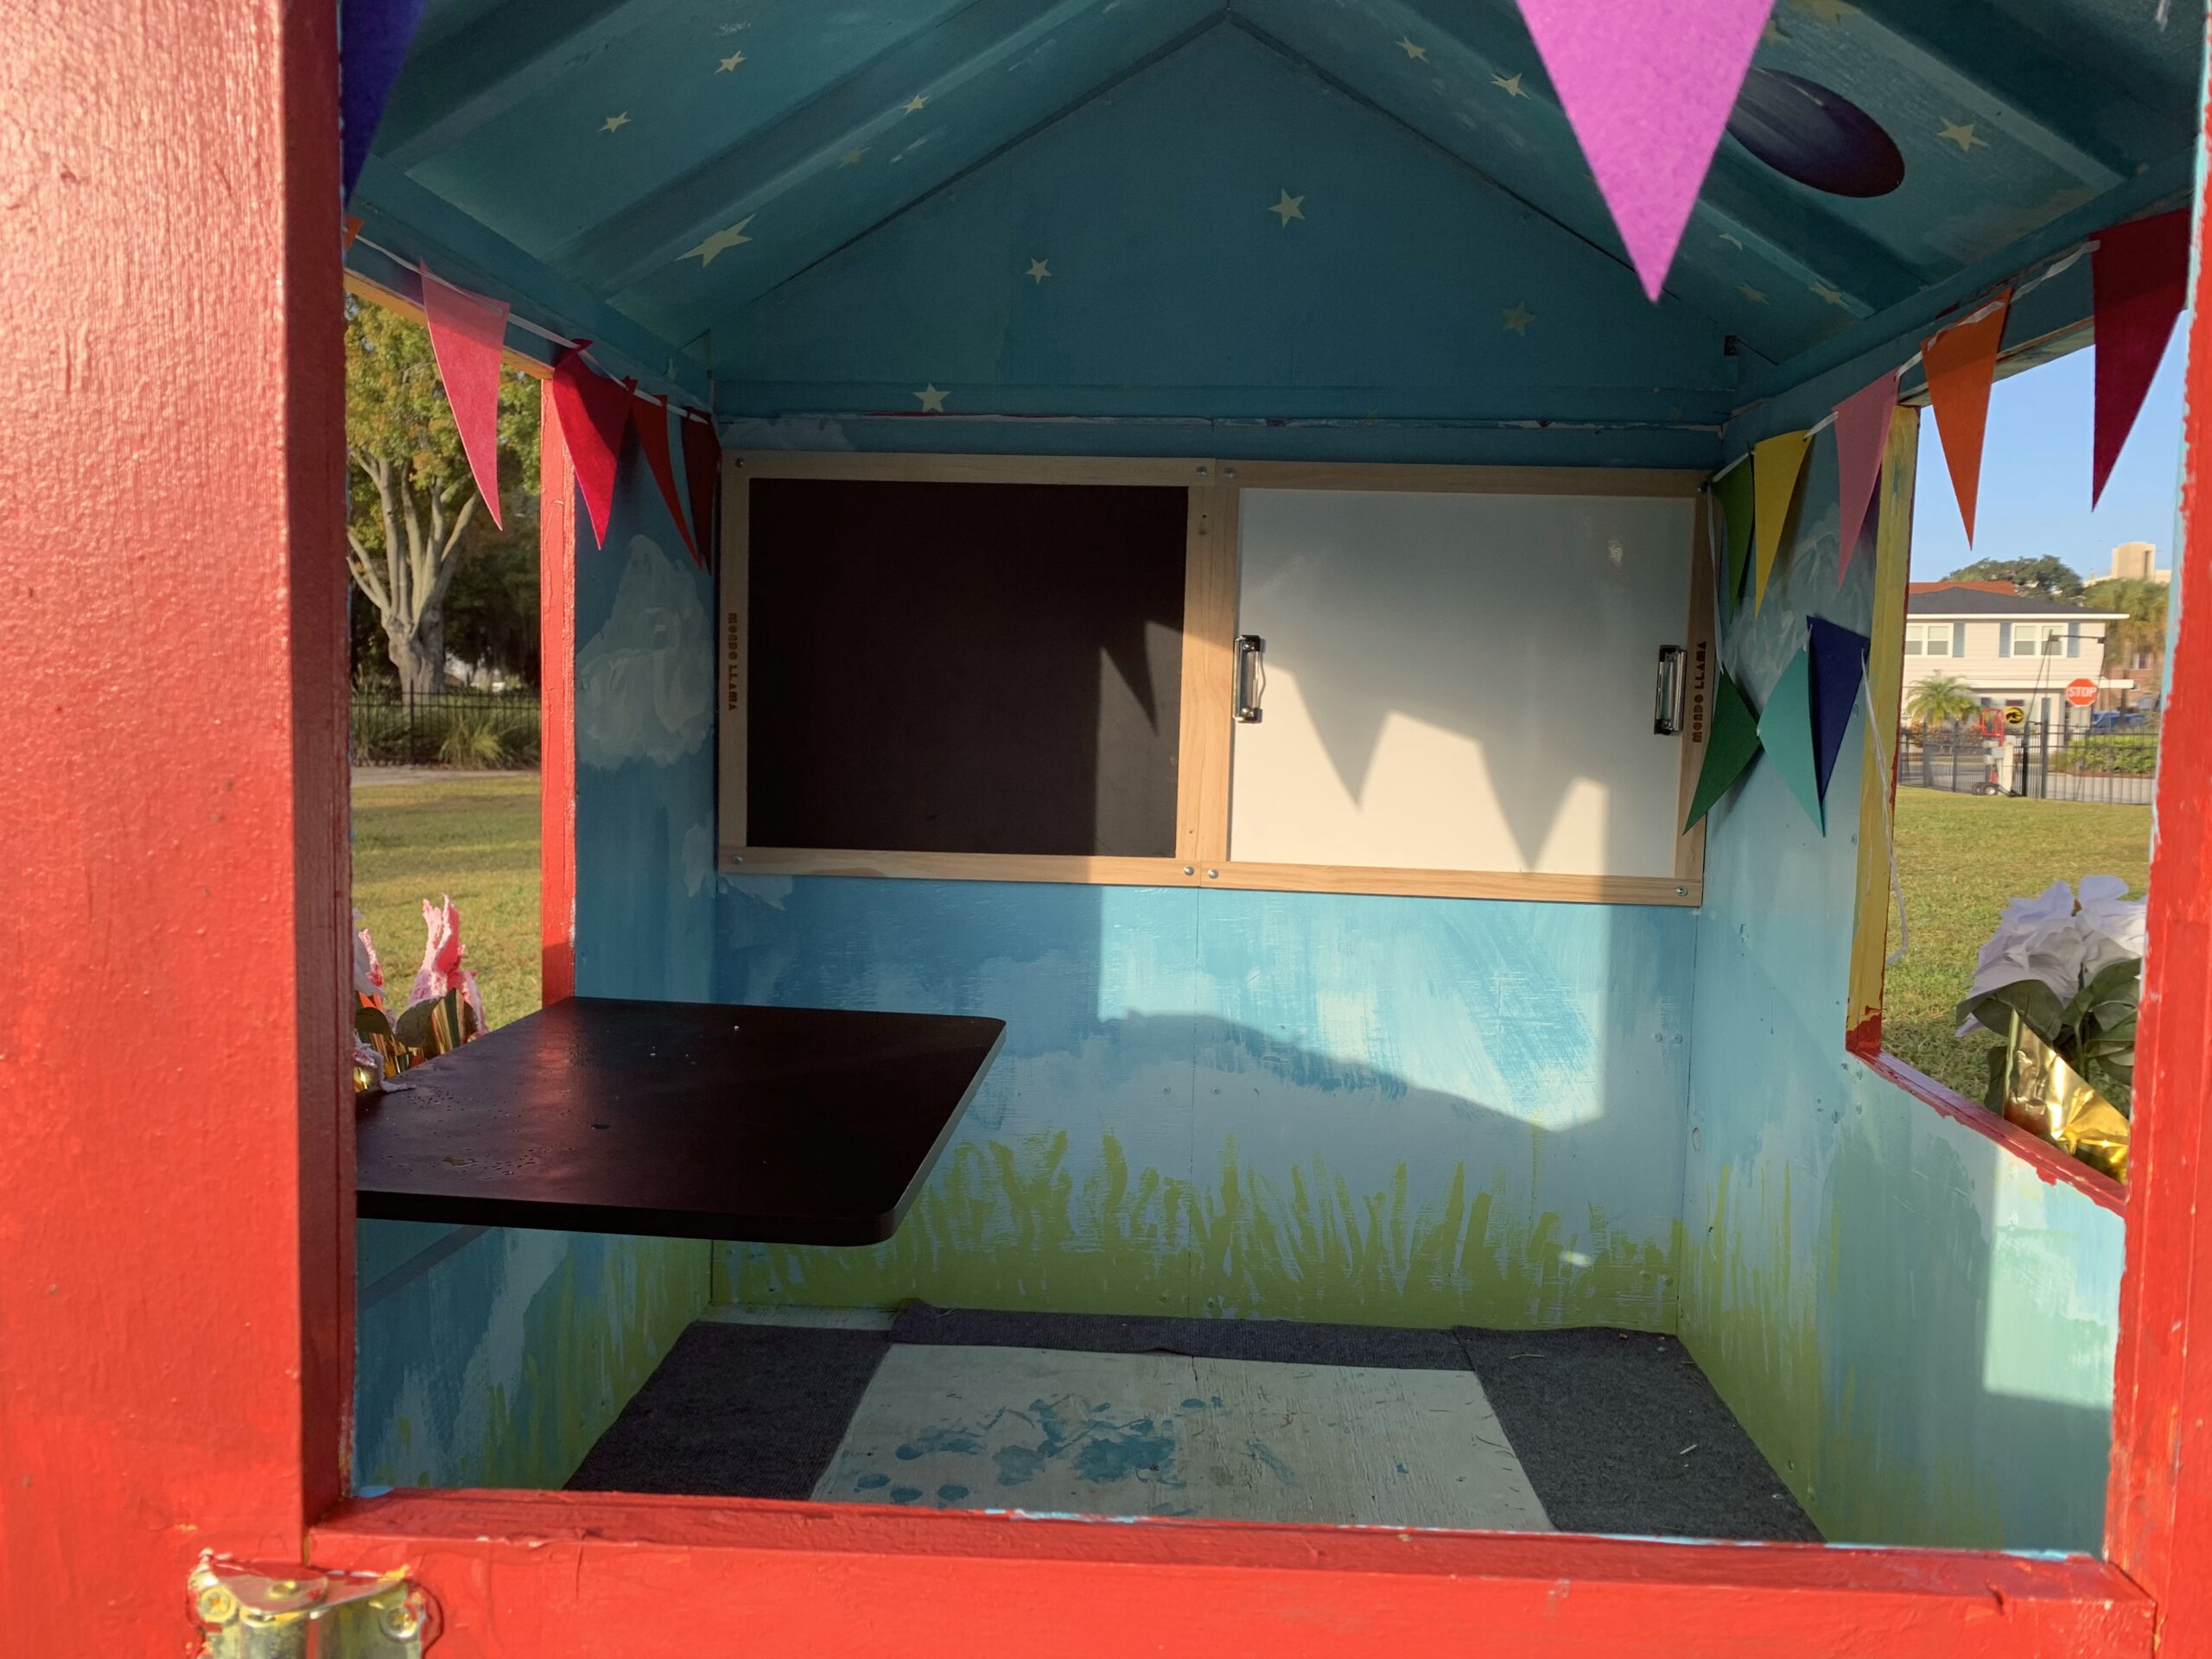 Shuffield Lowman playhouse interior 2021